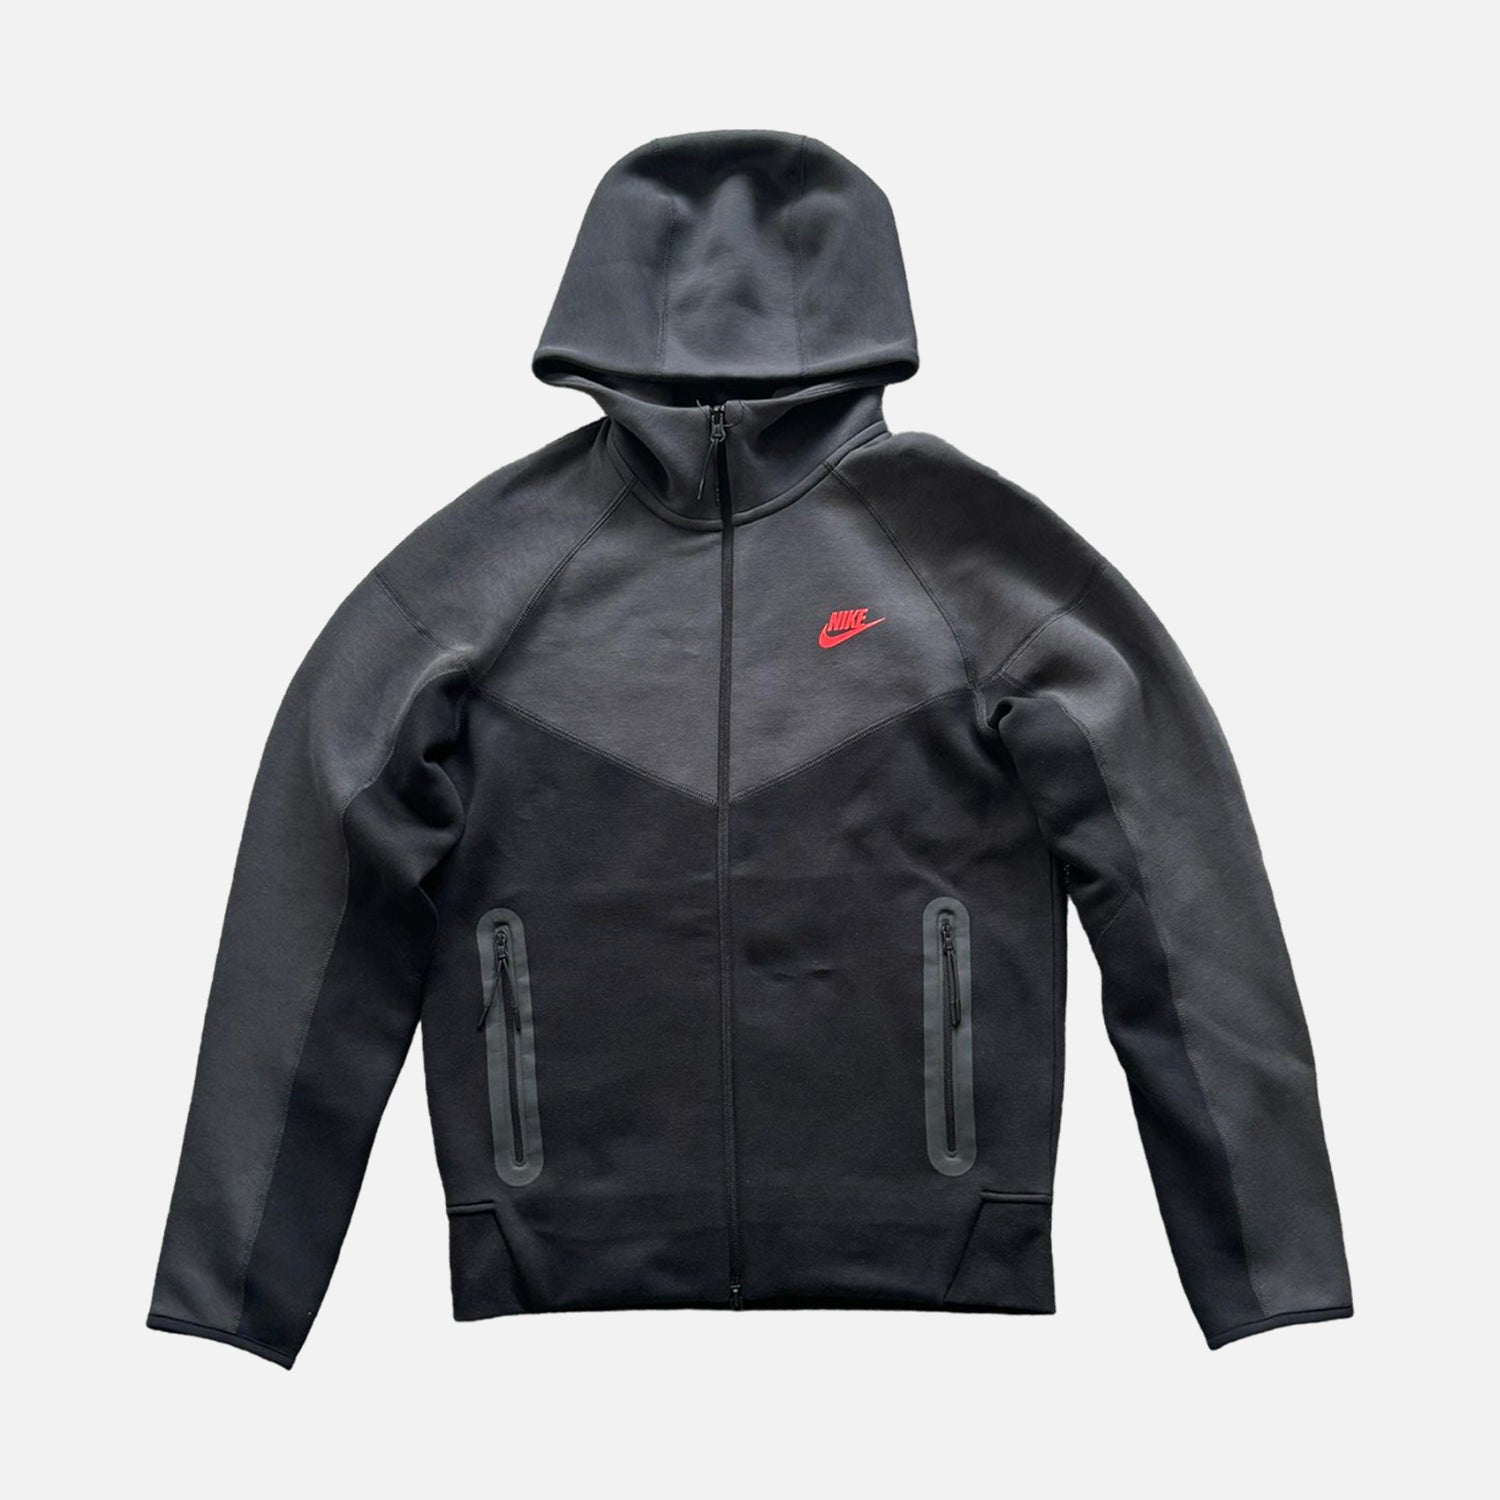 Nike Tech Fleece Zip-Up Hoodie - Black / Smoke Grey / Crimson Red (New SZN)